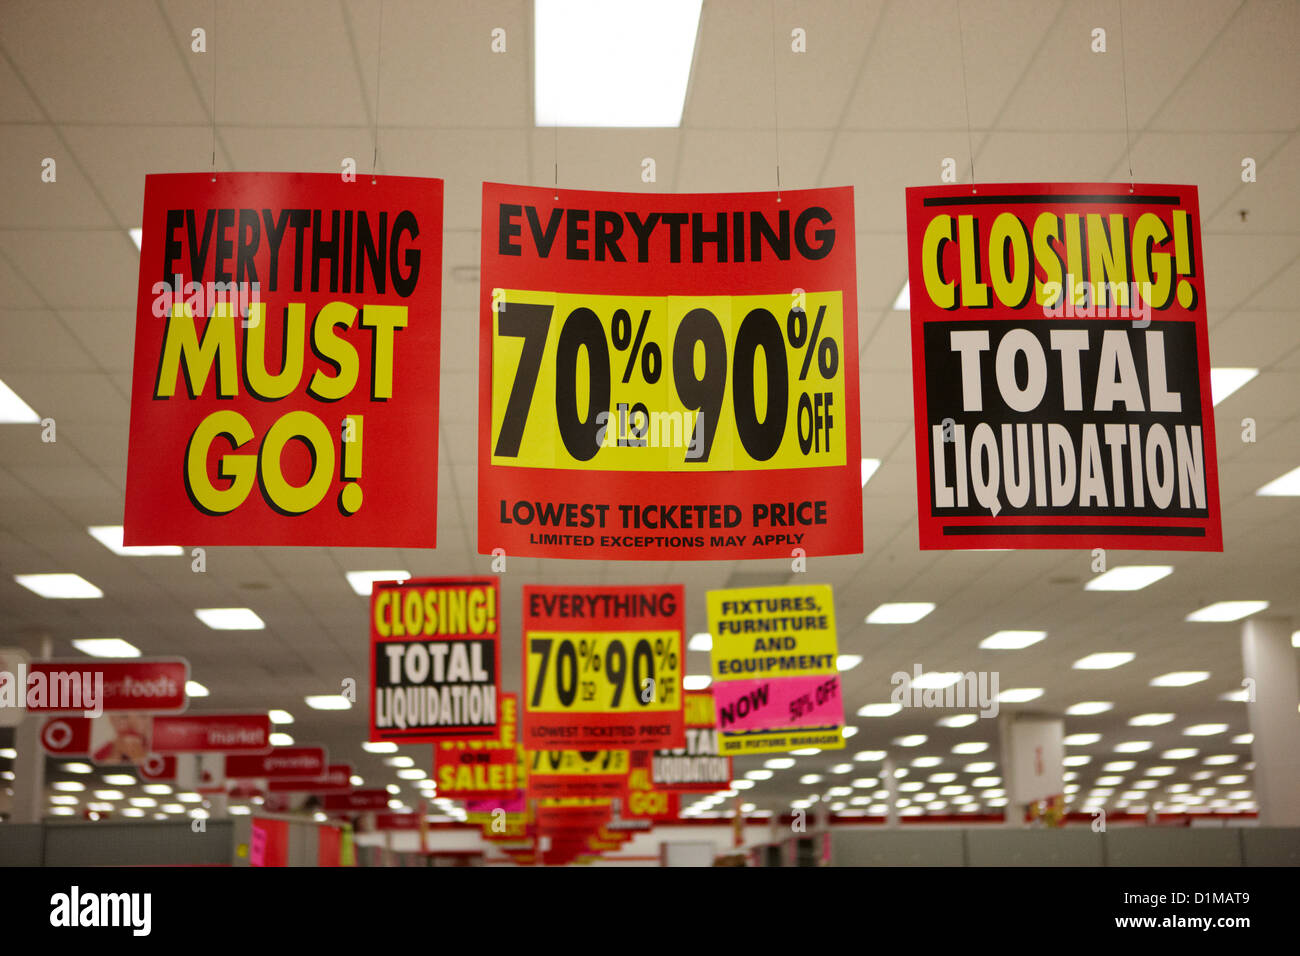 everything must go total liquidation closing signs in a store in Saskatoon saskatchewan canada Stock Photo